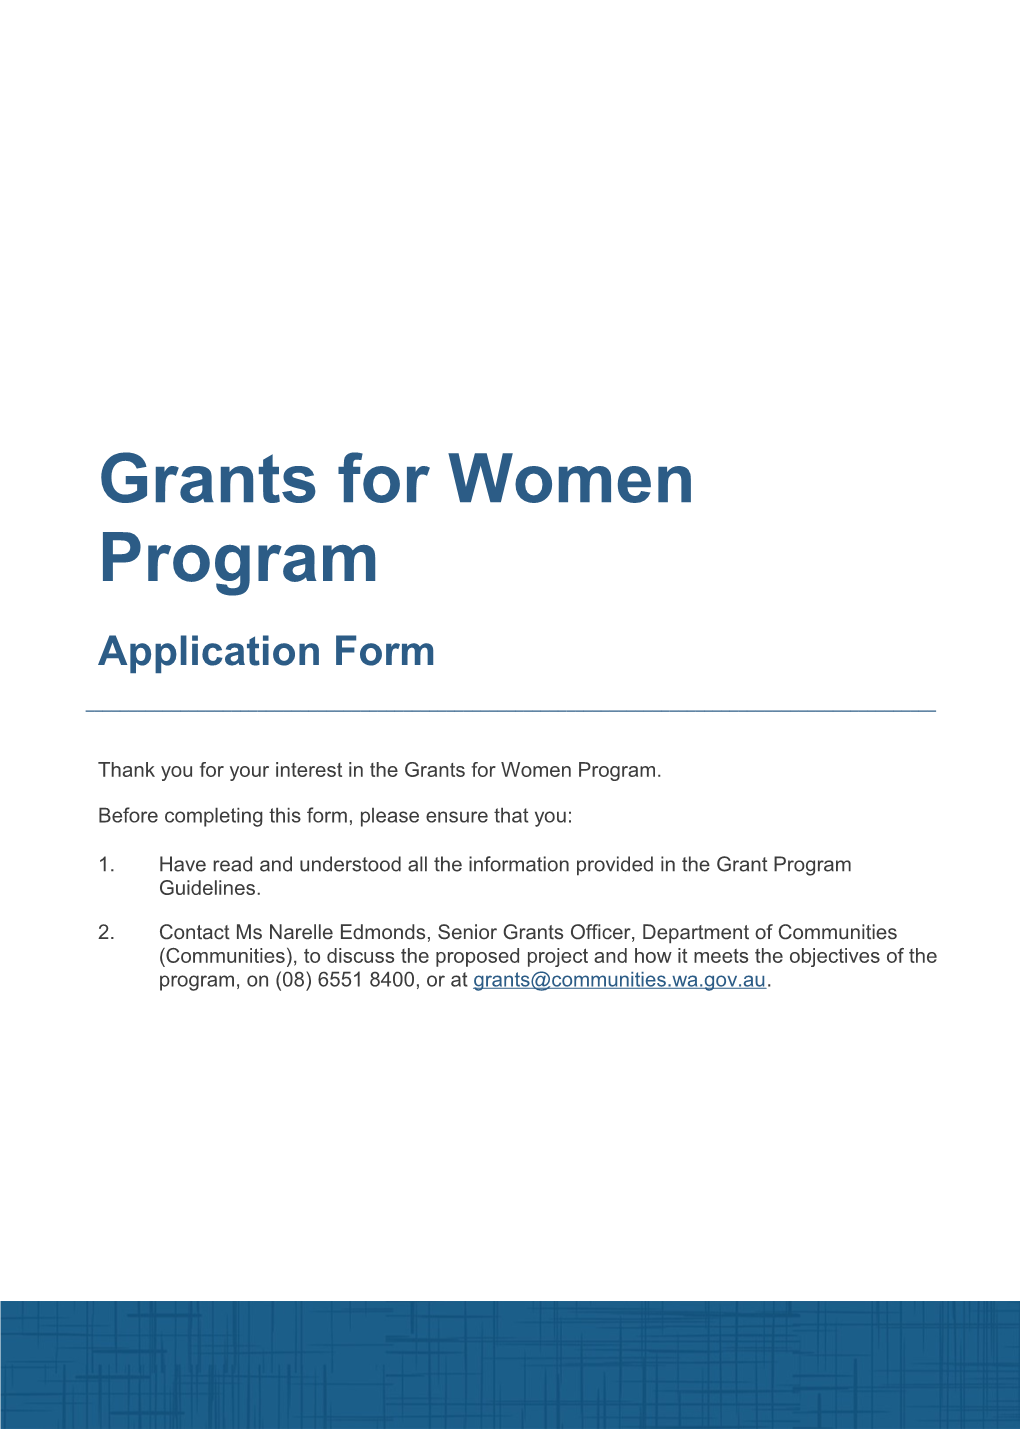 Grants for Women - Application Form